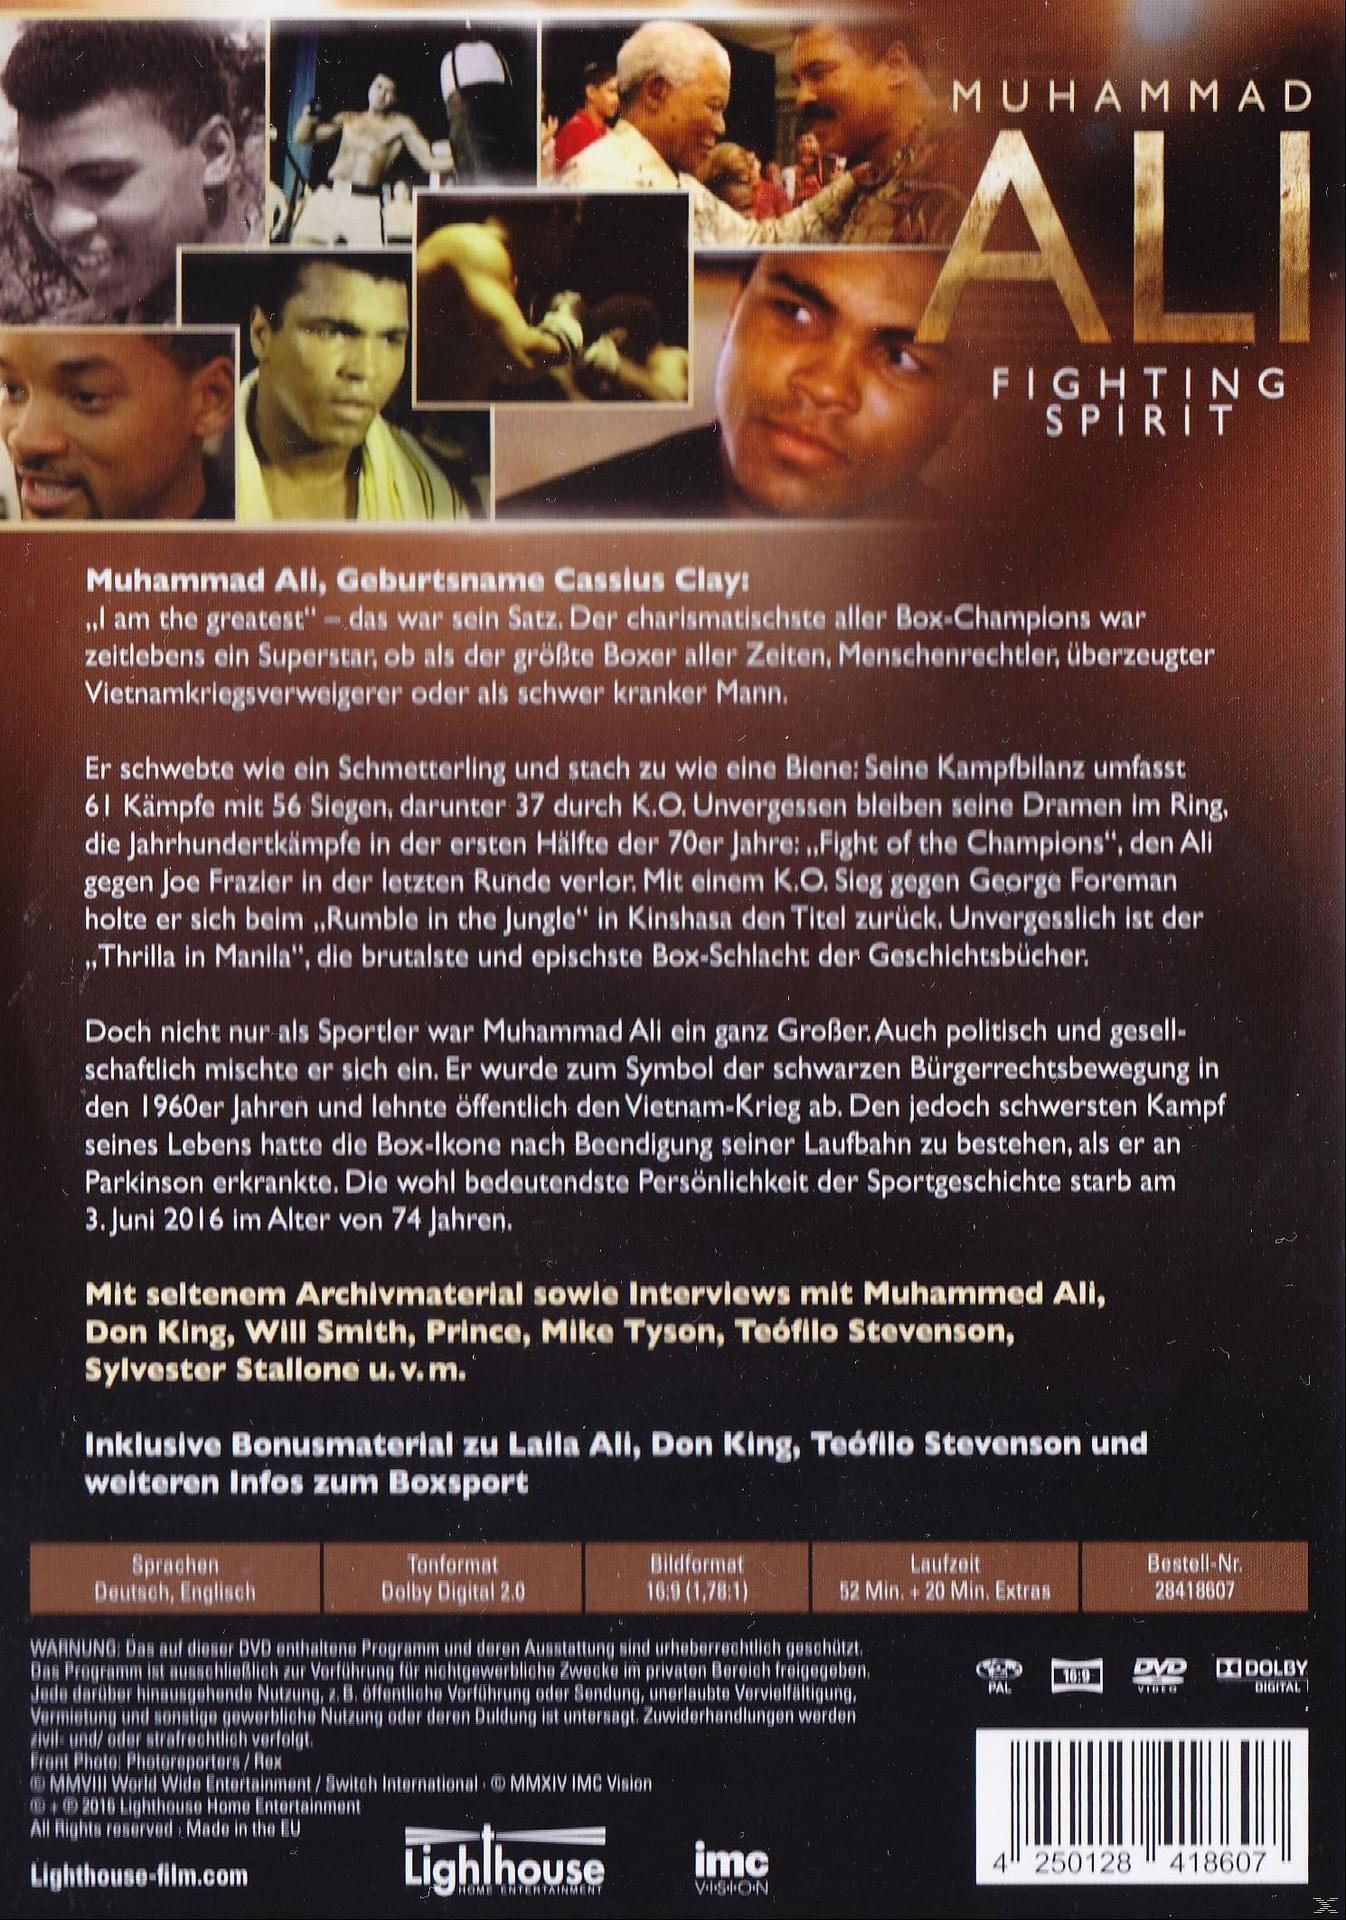 Muhammad Ali - Fighting Spirit DVD